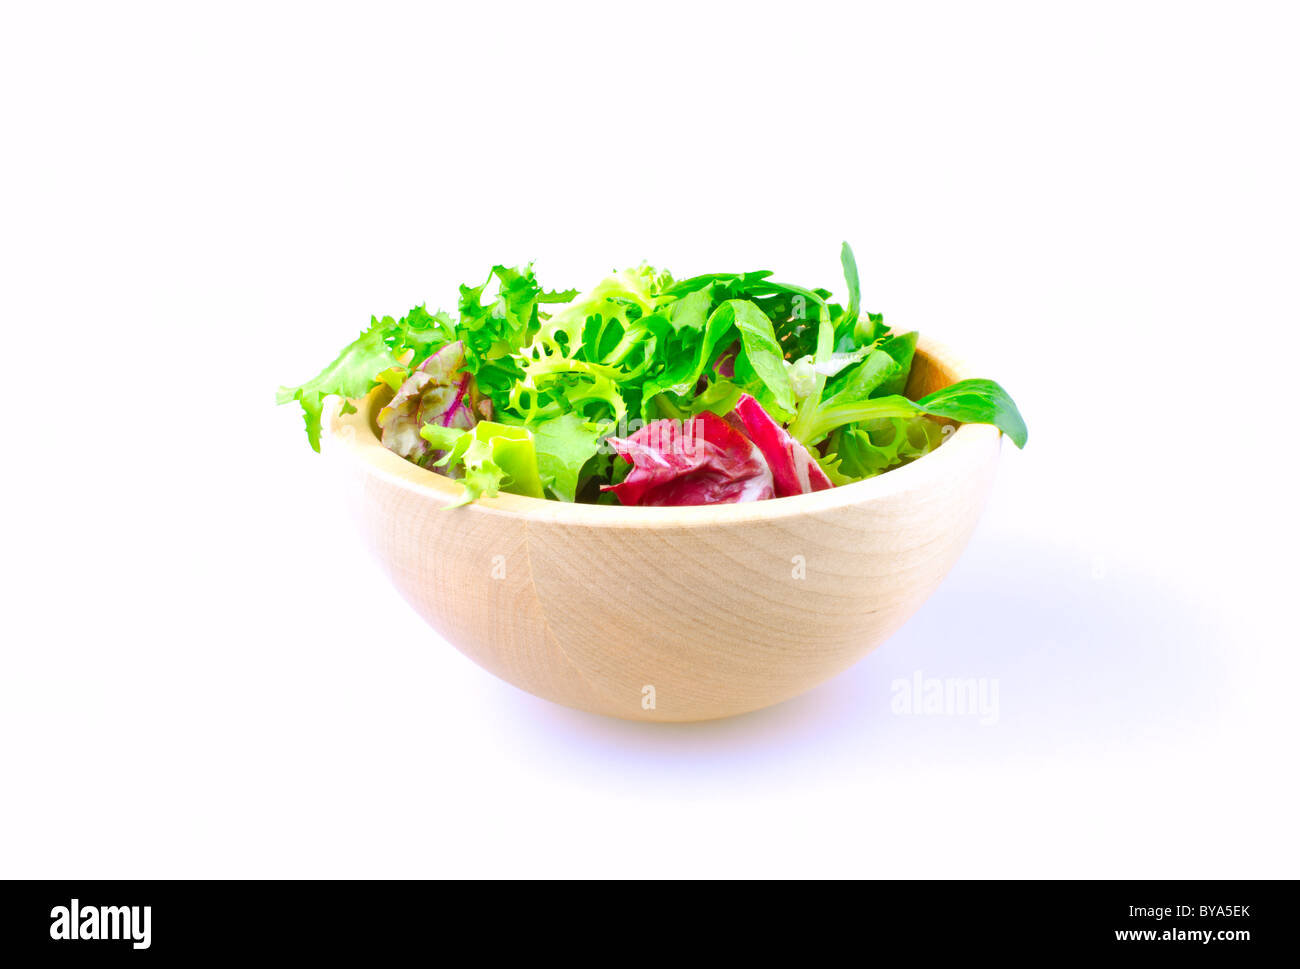 785,517 Salad Bowl Images, Stock Photos, 3D objects, & Vectors